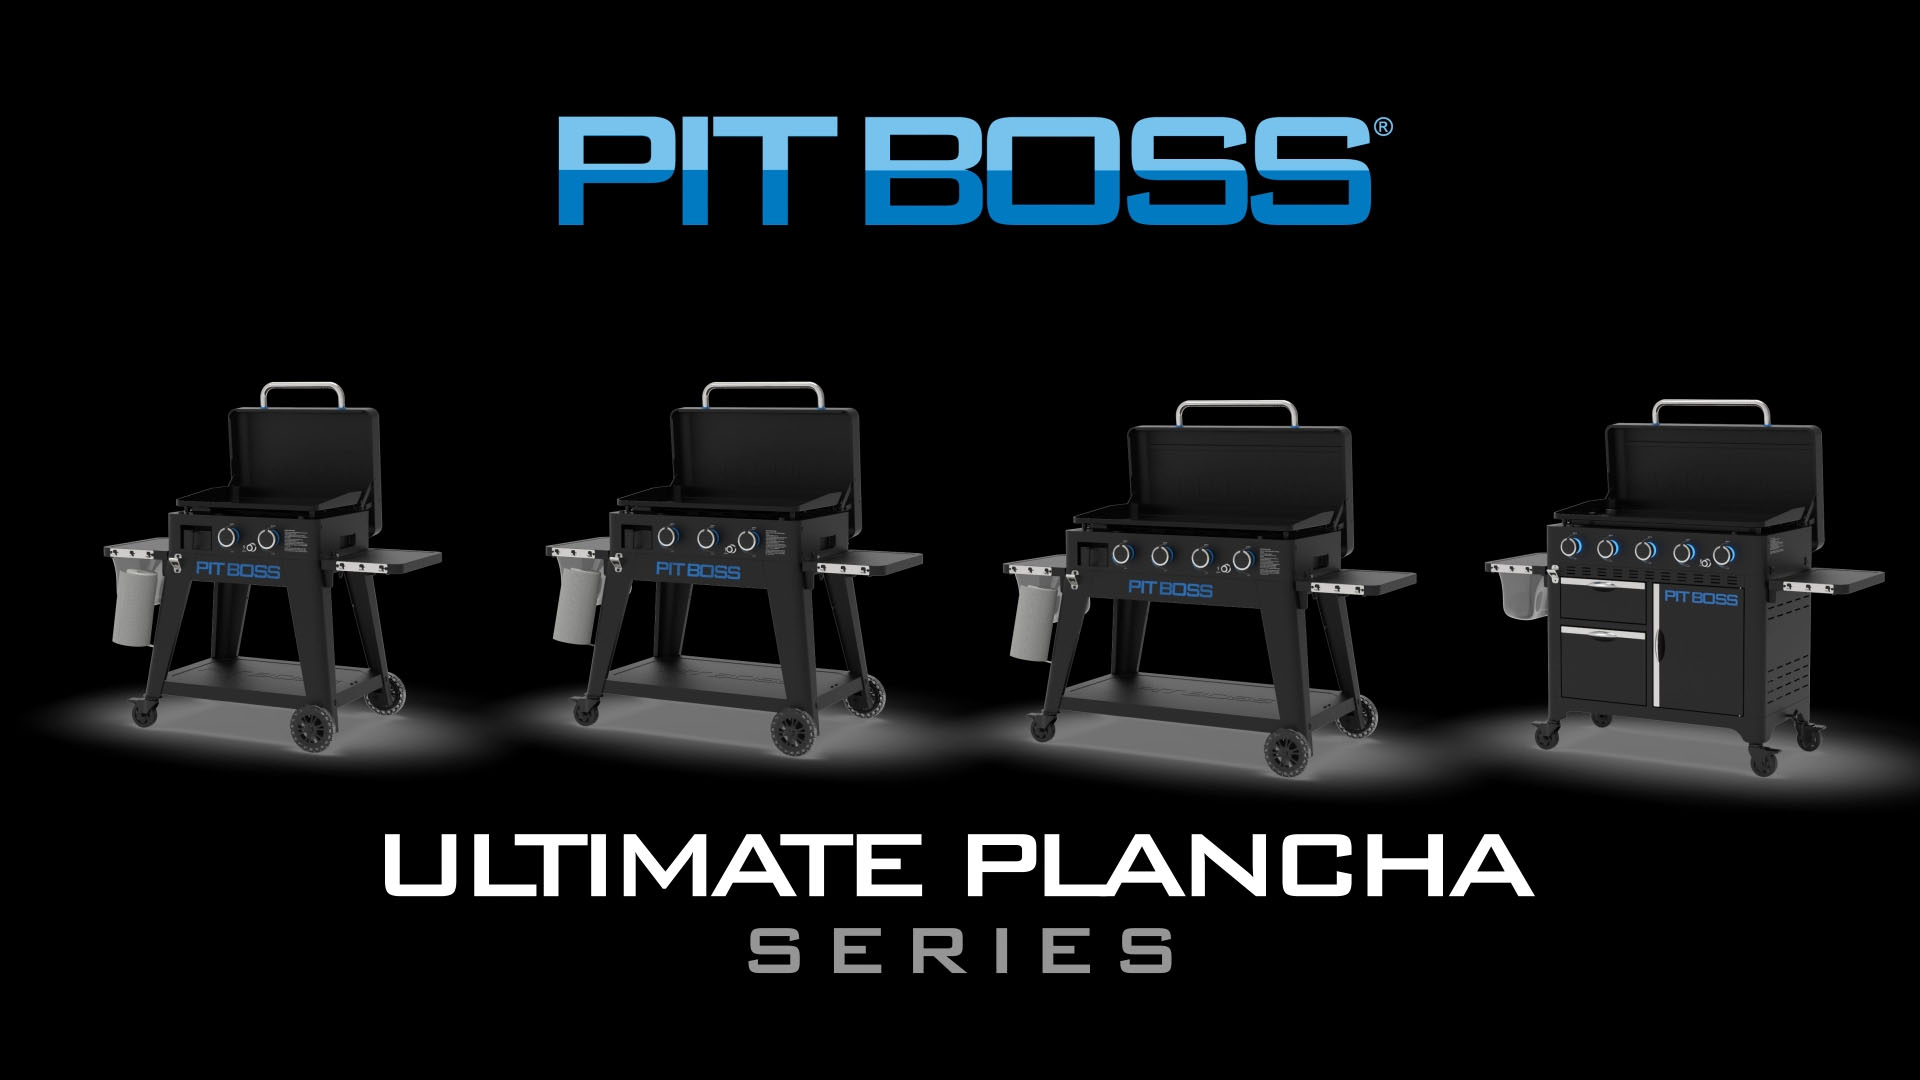 PitBoss Plancha Line-up